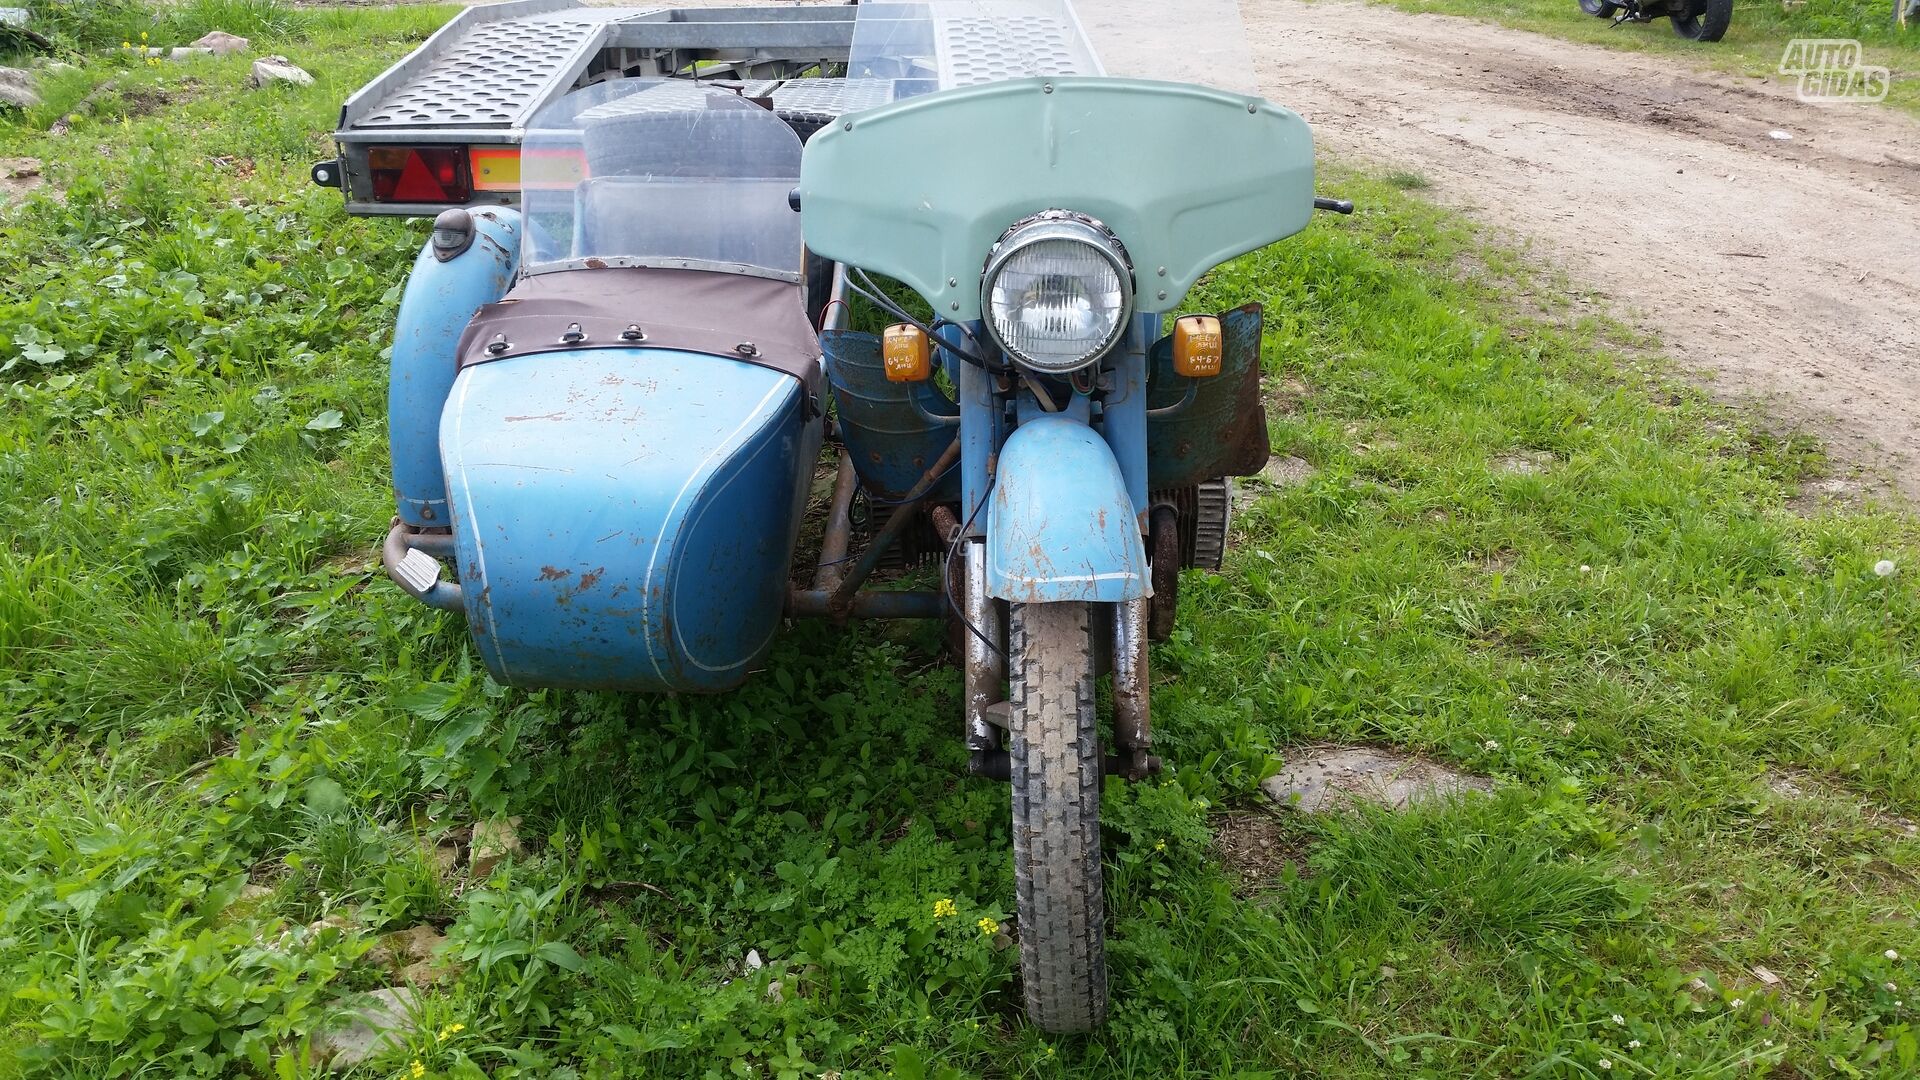 Dniepr MT-9 1974 y Three-wheel motorcycle